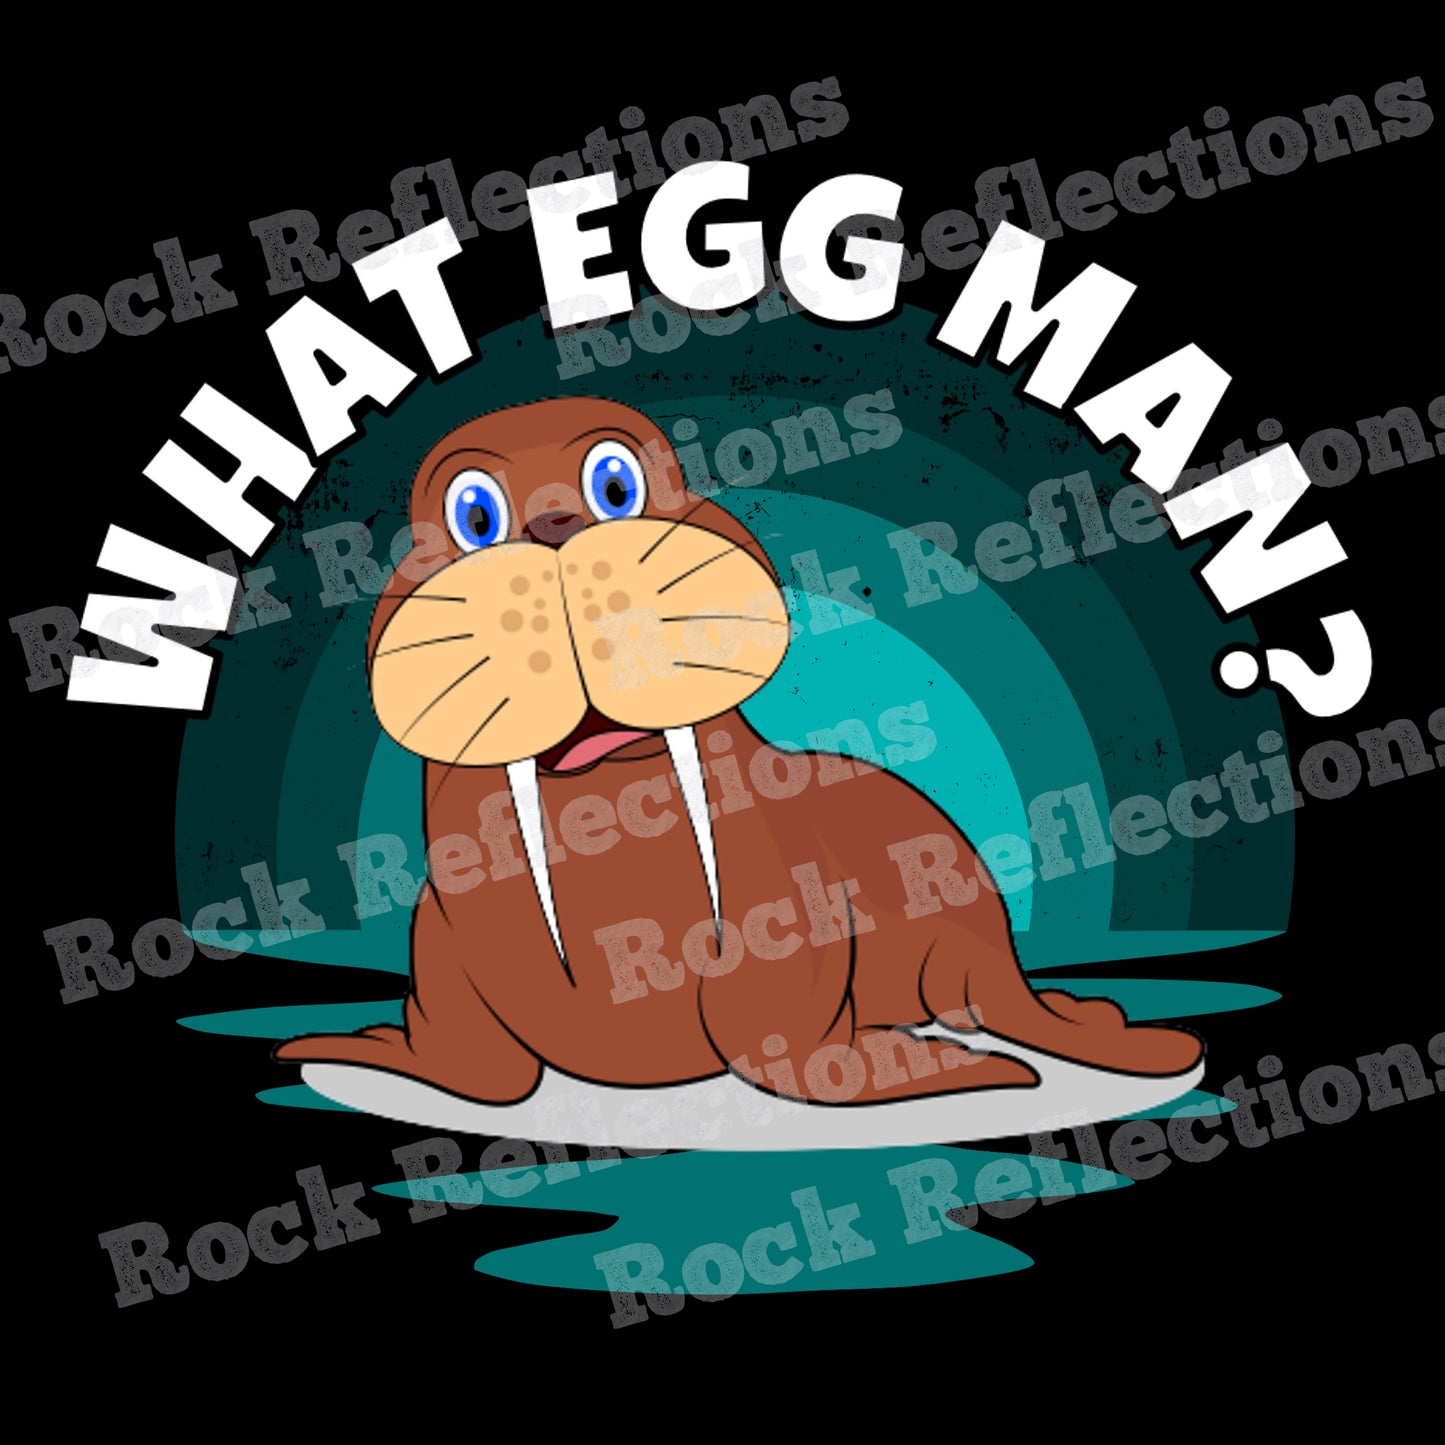 Walrus - What Egg Man Black Mug CustomCat